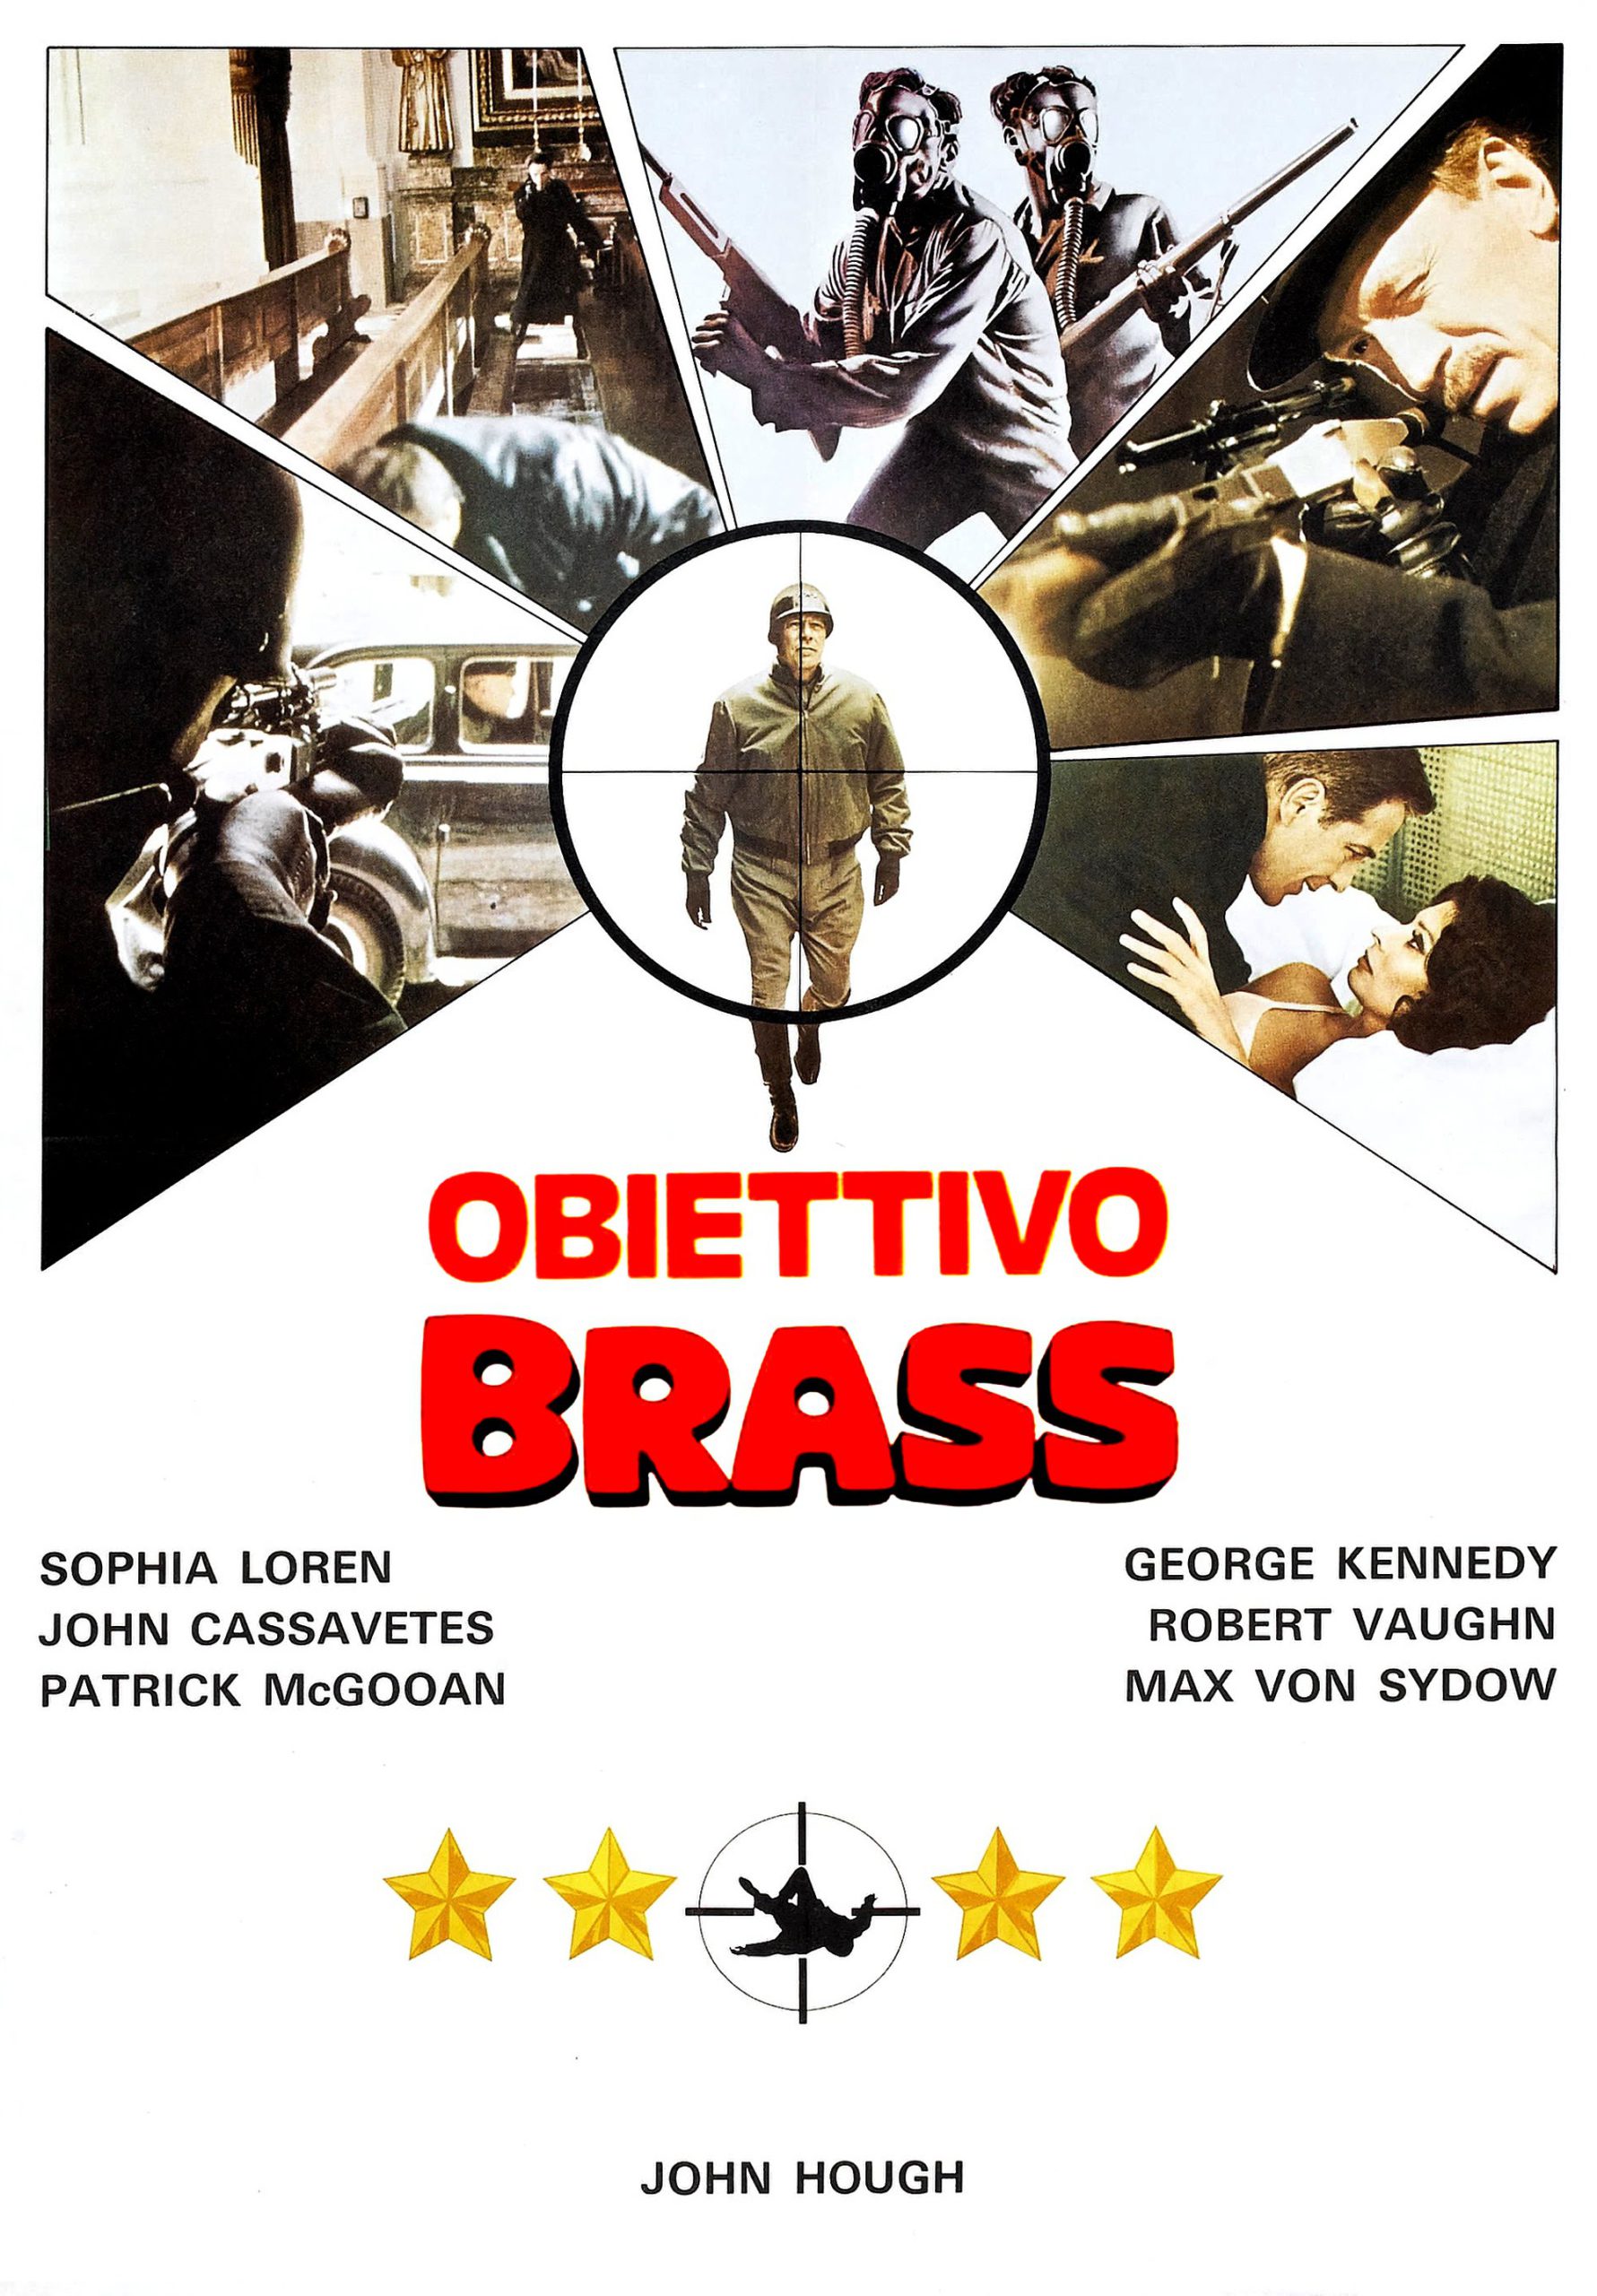 Obiettivo Brass [HD] (1978)